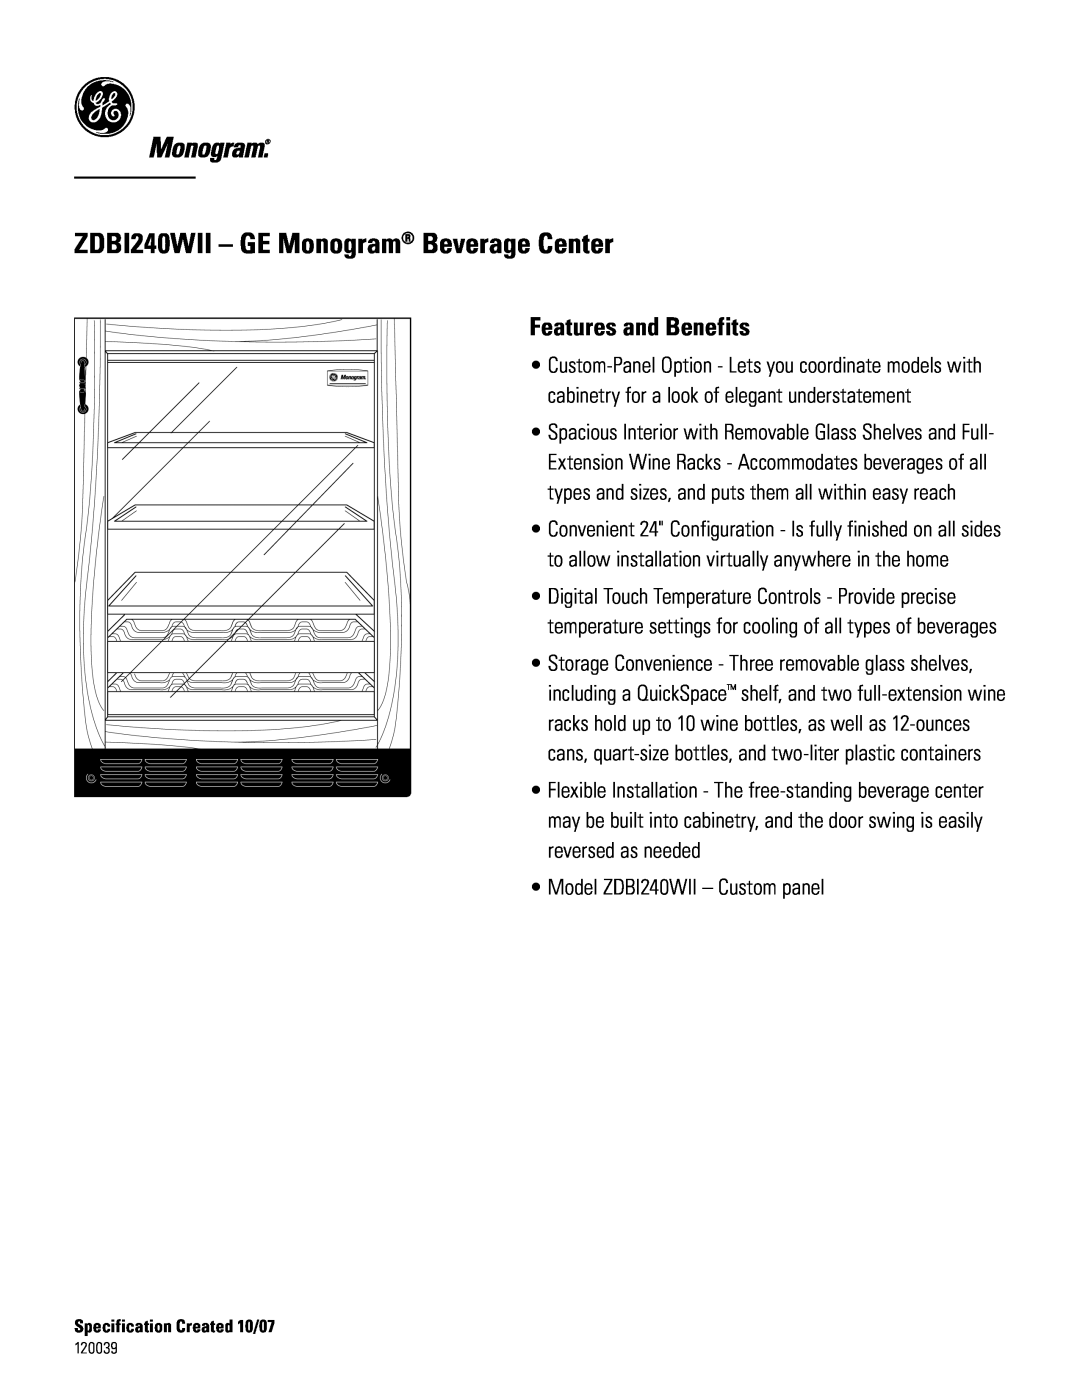 GE Monogram dimensions ZDBI240WII - GE Monogram Beverage Center, Features and Benefits, Model ZDBI240WII - Custom panel 